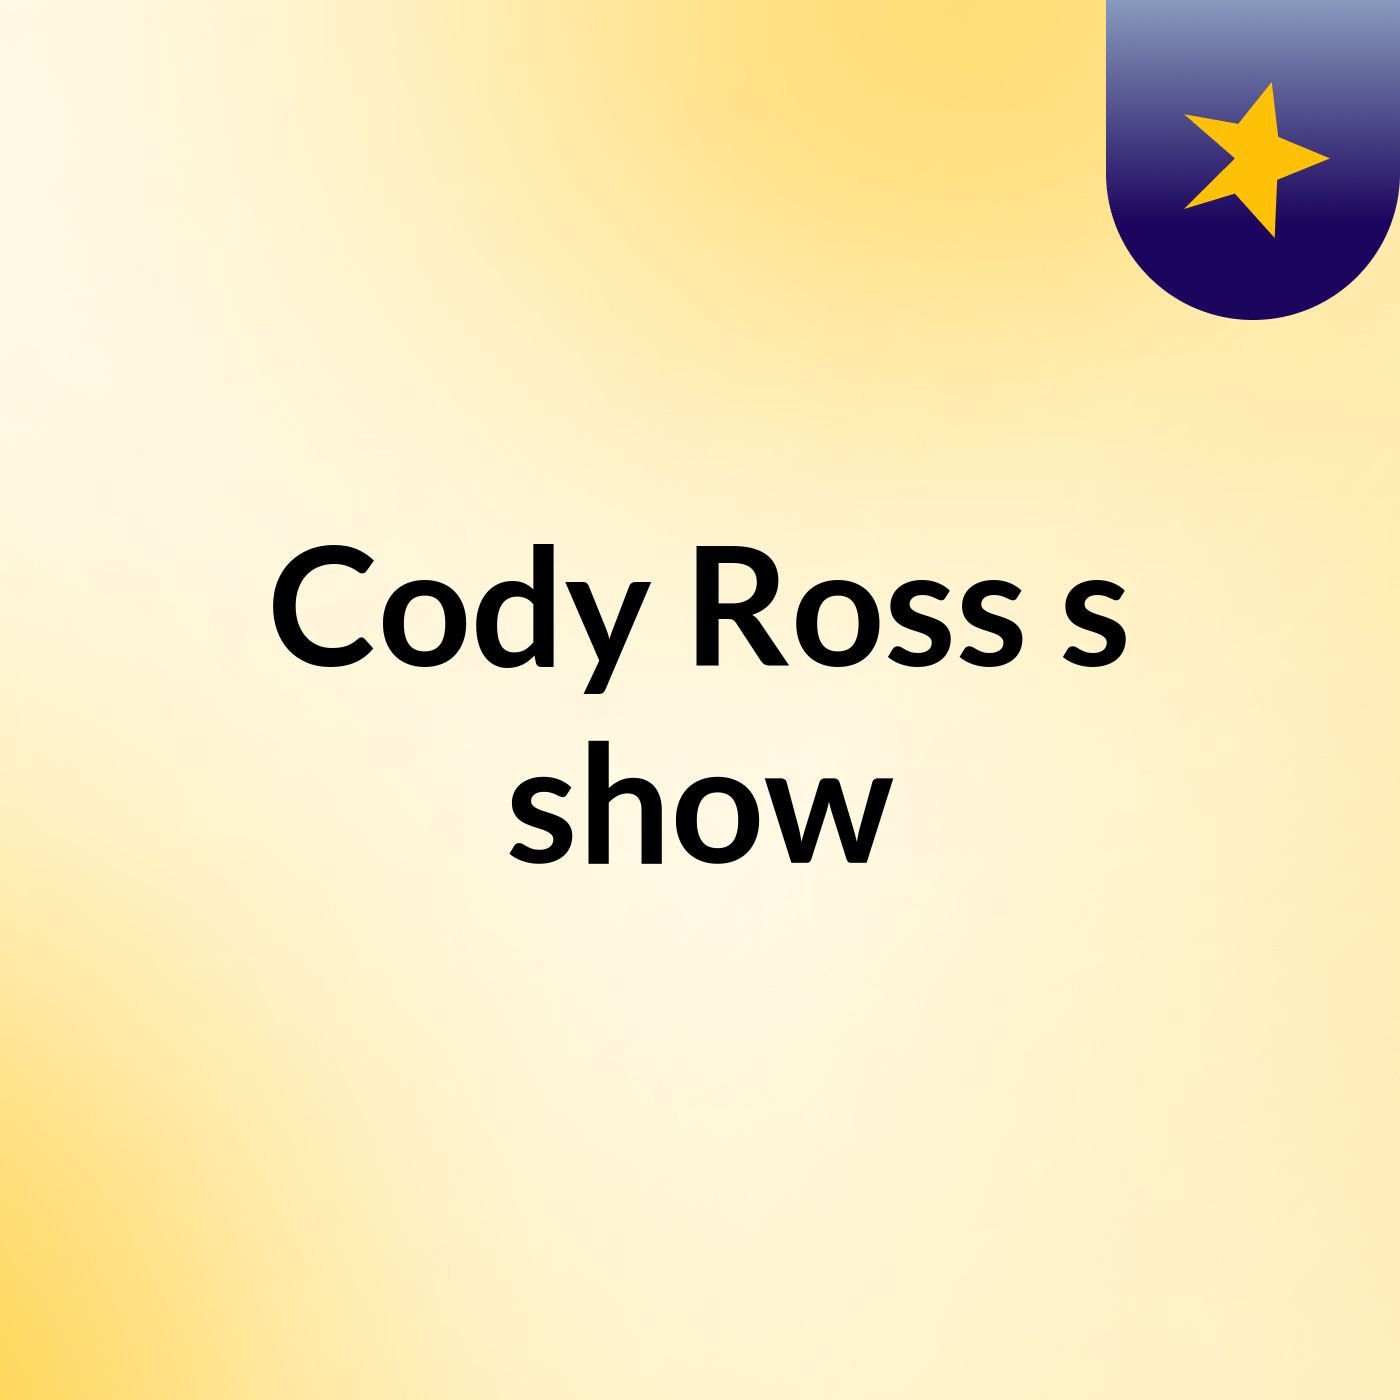 Cody Ross's show